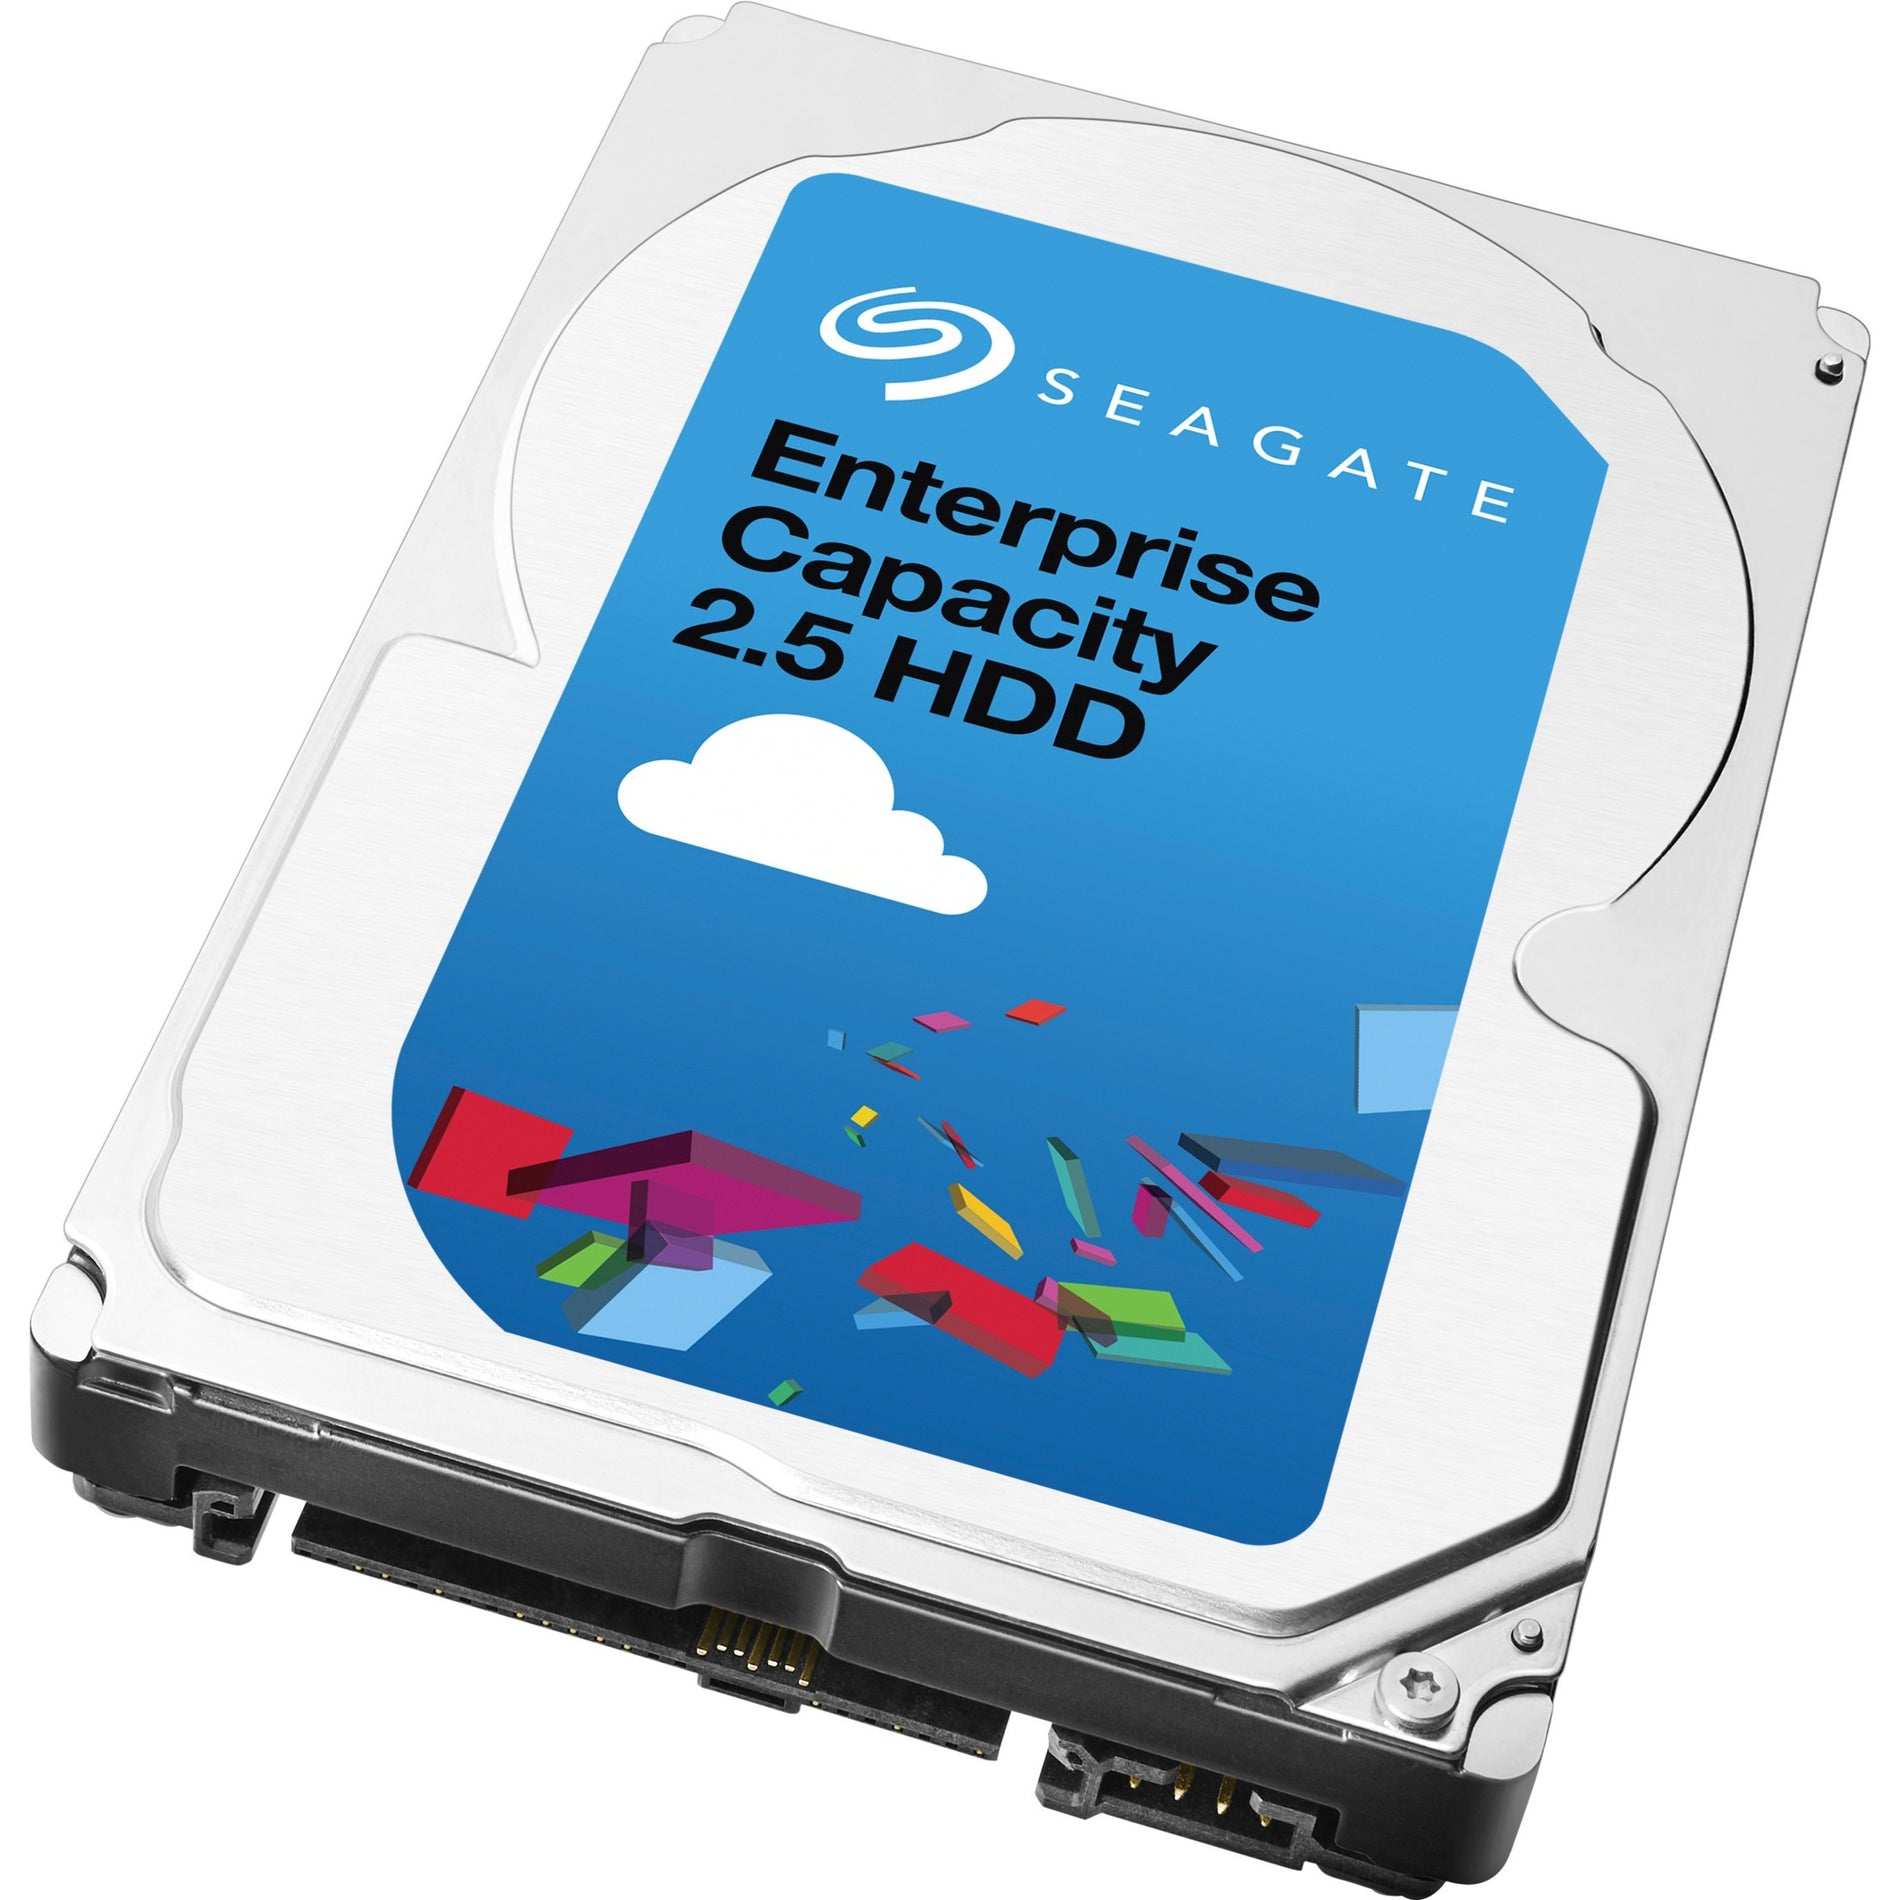 Seagate ST2000NX0433 Enterprise Capacity 2.5 HDD, 2TB SAS Hard Drive, 7200 RPM, 128MB Buffer